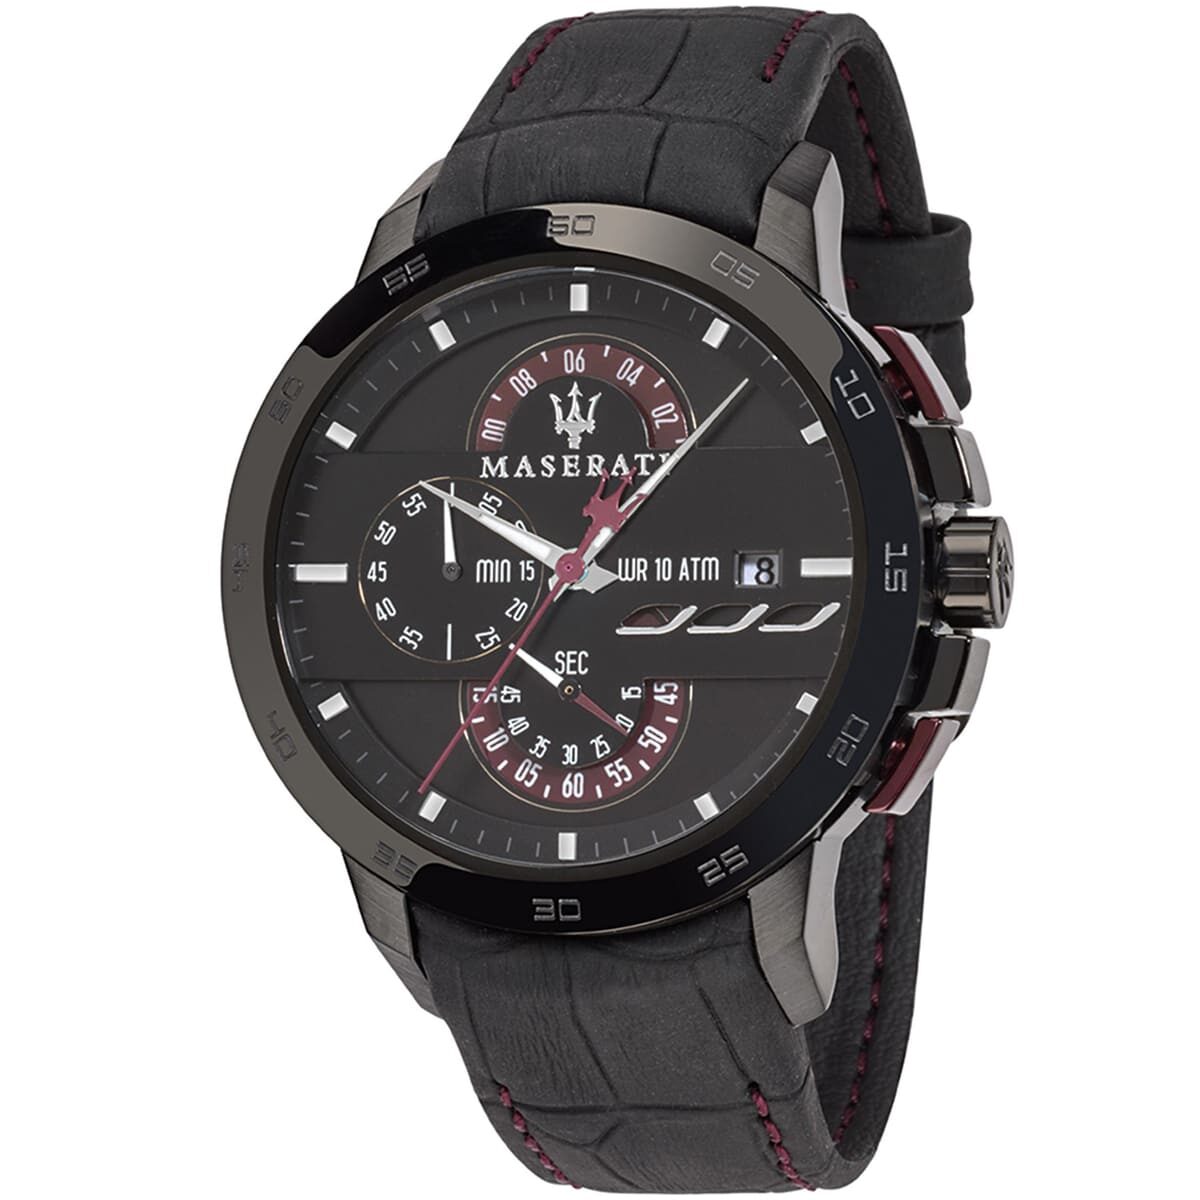 r8871619003-maserati-watch-men-black-dial-leather-strap-quartz-battery-analog-chronograph-wr-10-atm-ingegno